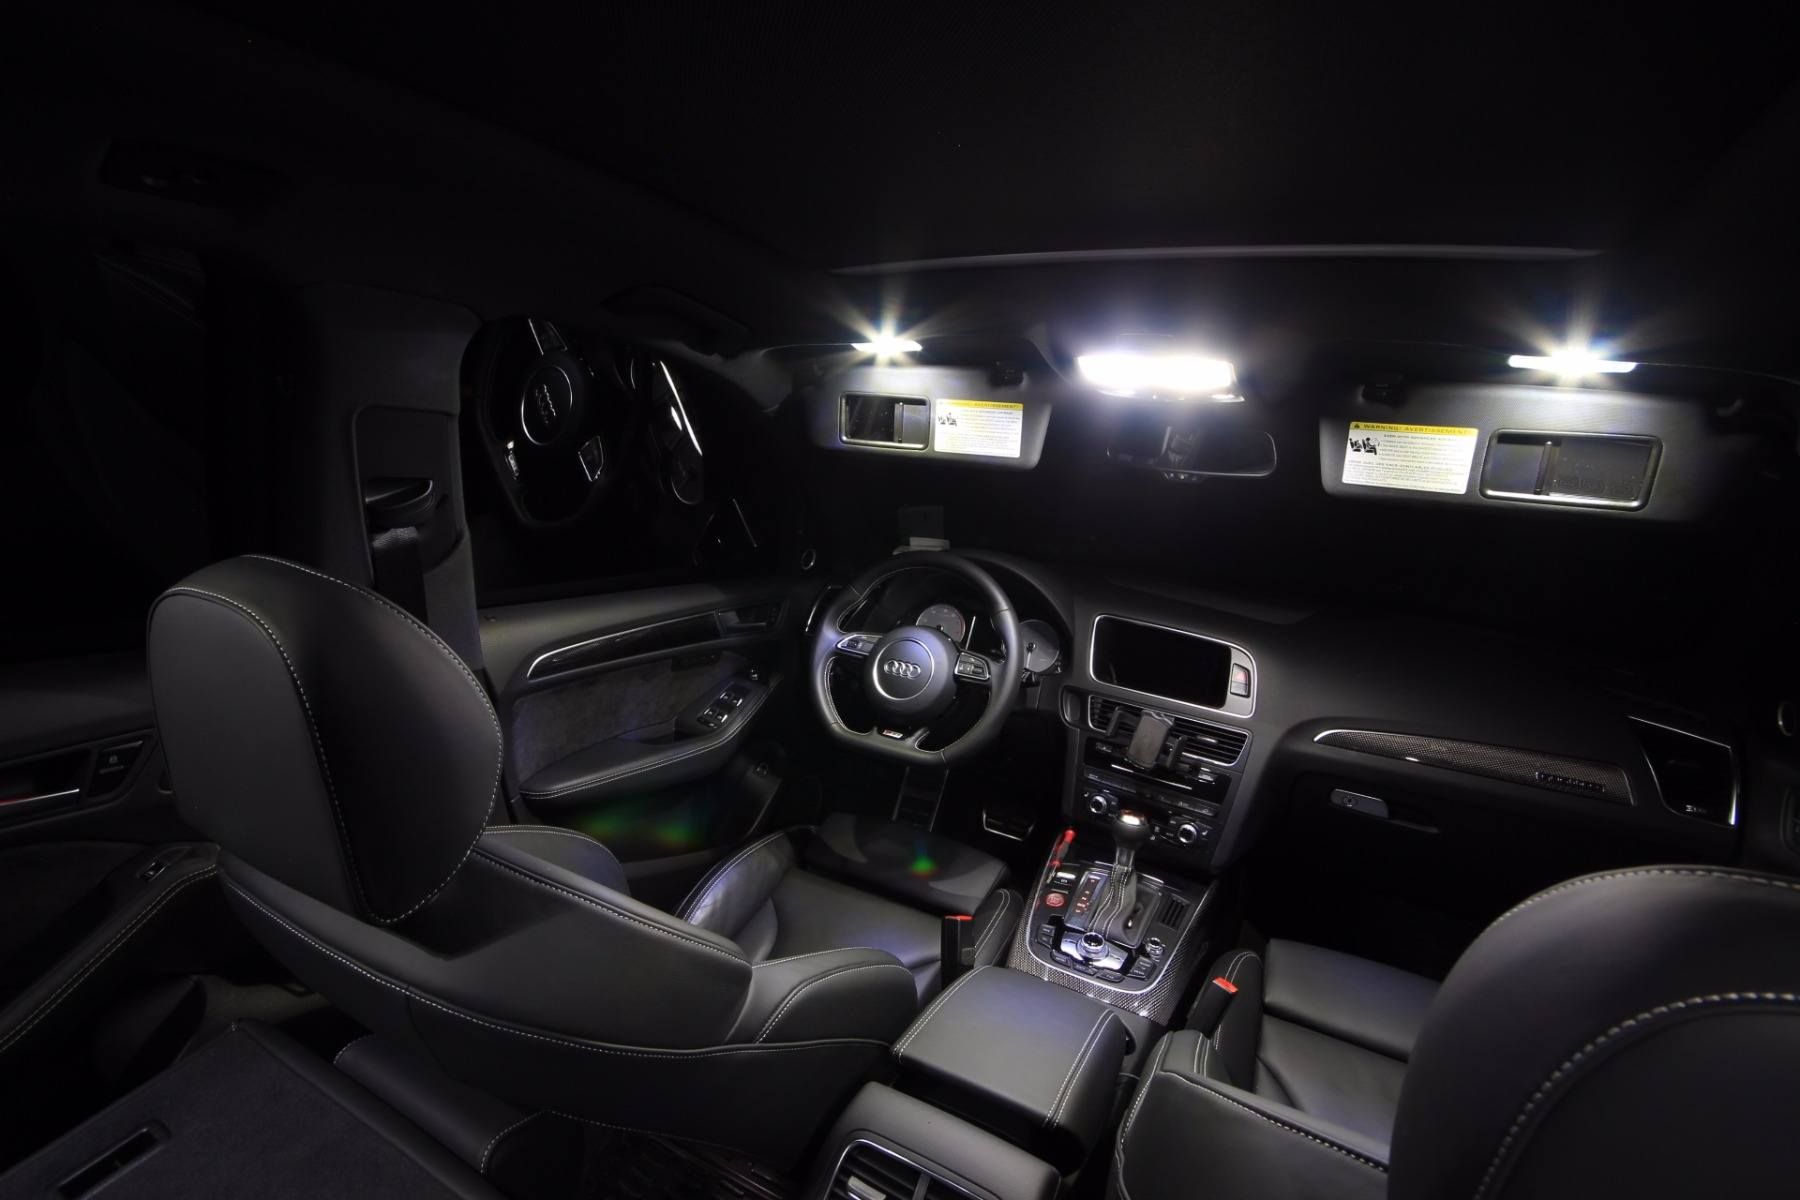 6 pcs Xenon White Car LED Interior Lights Package kit Fit 2014-up Mazda 3